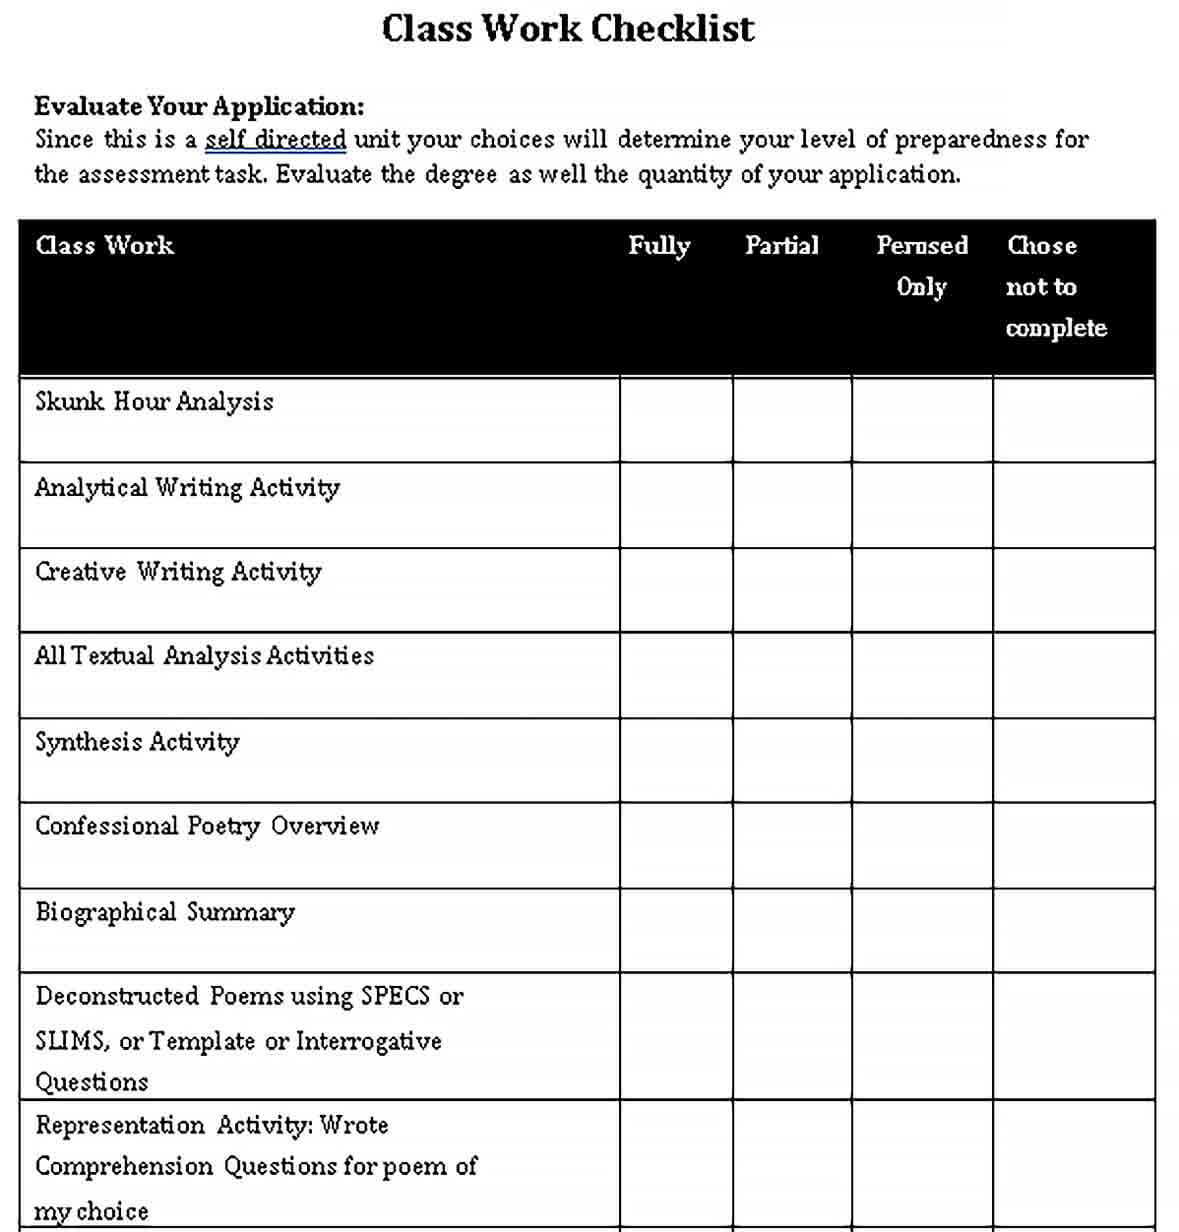 Sample Class Work Checklist